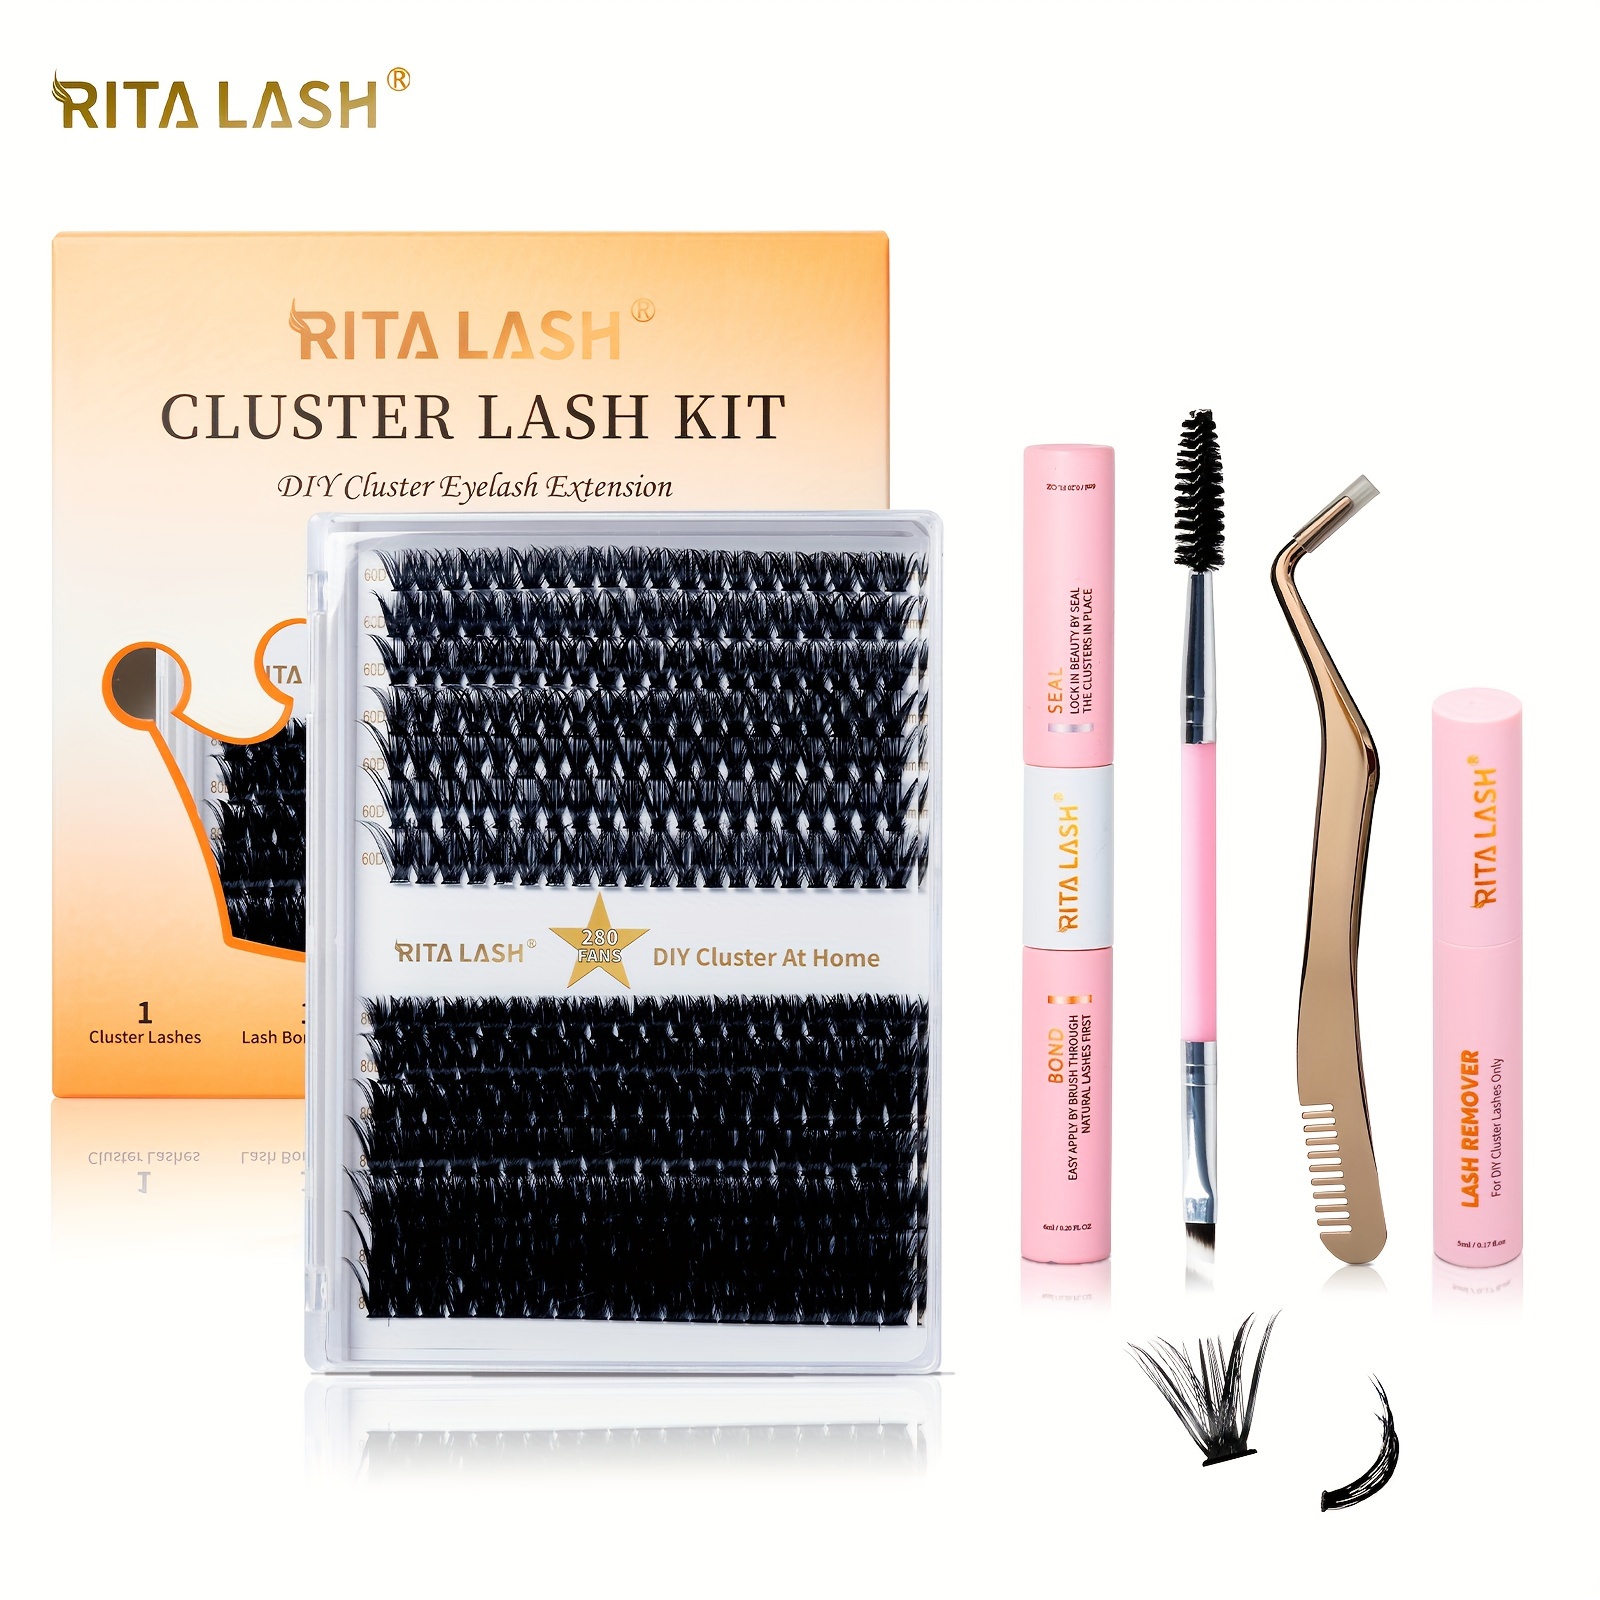 

Ritalash Diy Lash Extension Kit, 280 Pcs Lash Clusters With Lash Bond And Seal, Mascara Brush Cluster Lash Glue Remover, Lash Applicator